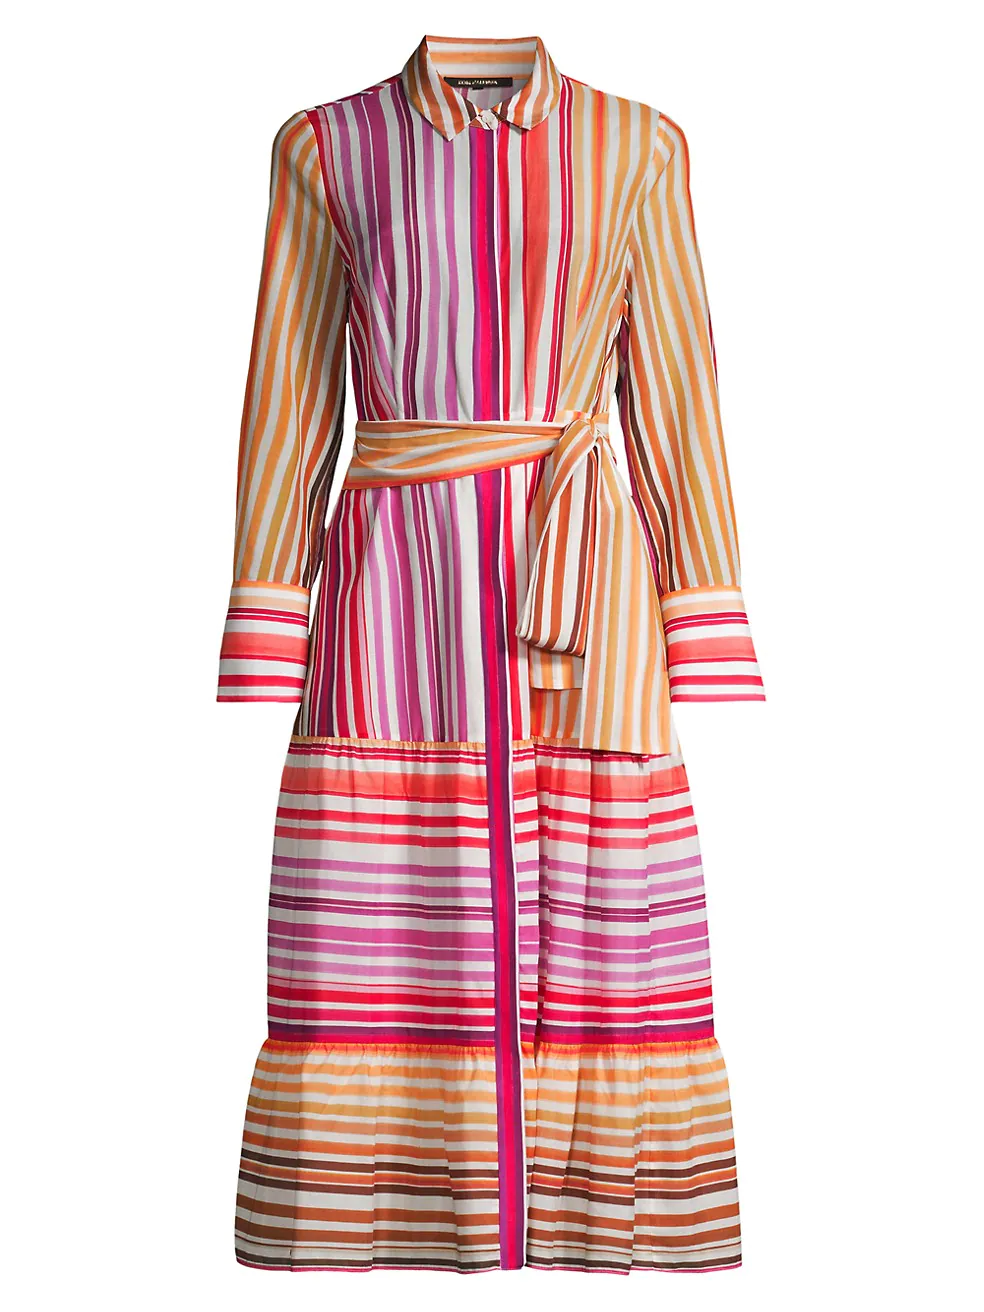 Spring dresses - new arrivals - stripe dress - fashion - sales - Saks Fifth Avenue - sophistication